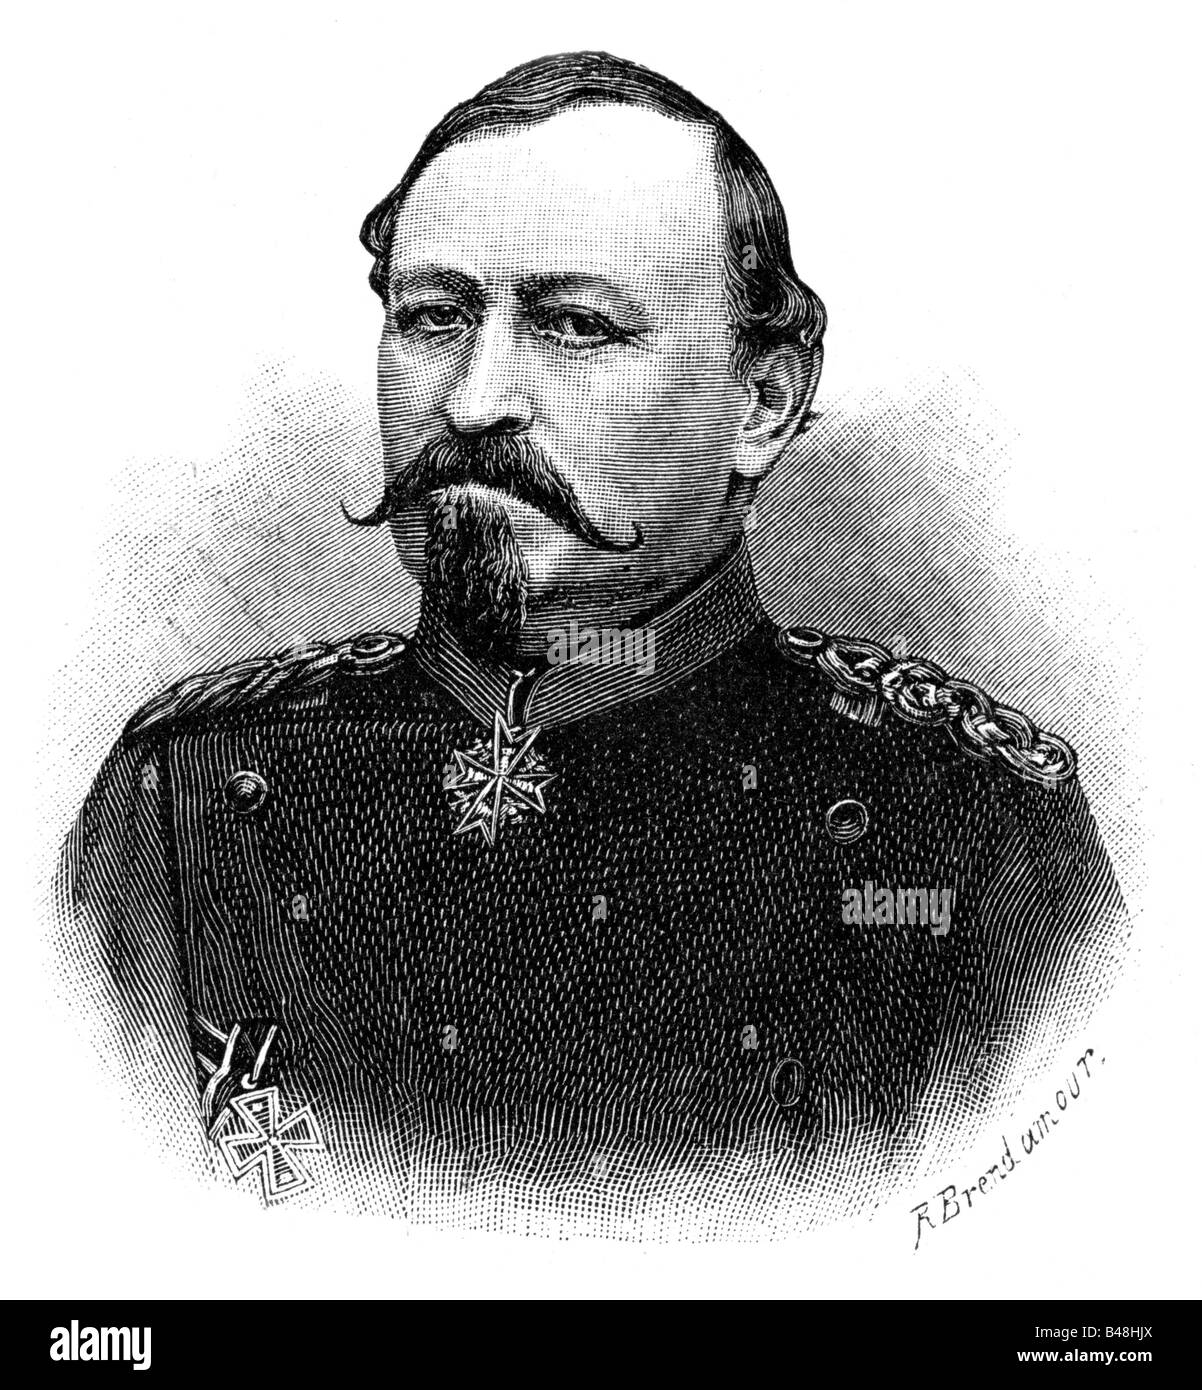 Ernest II, 21.6.1818 - 22.8.1893, Duke of Saxe-Corburg-Gotha  19.1.1844 - 22.8.1893, portrait, wood engraving, 19th century,  , Stock Photo